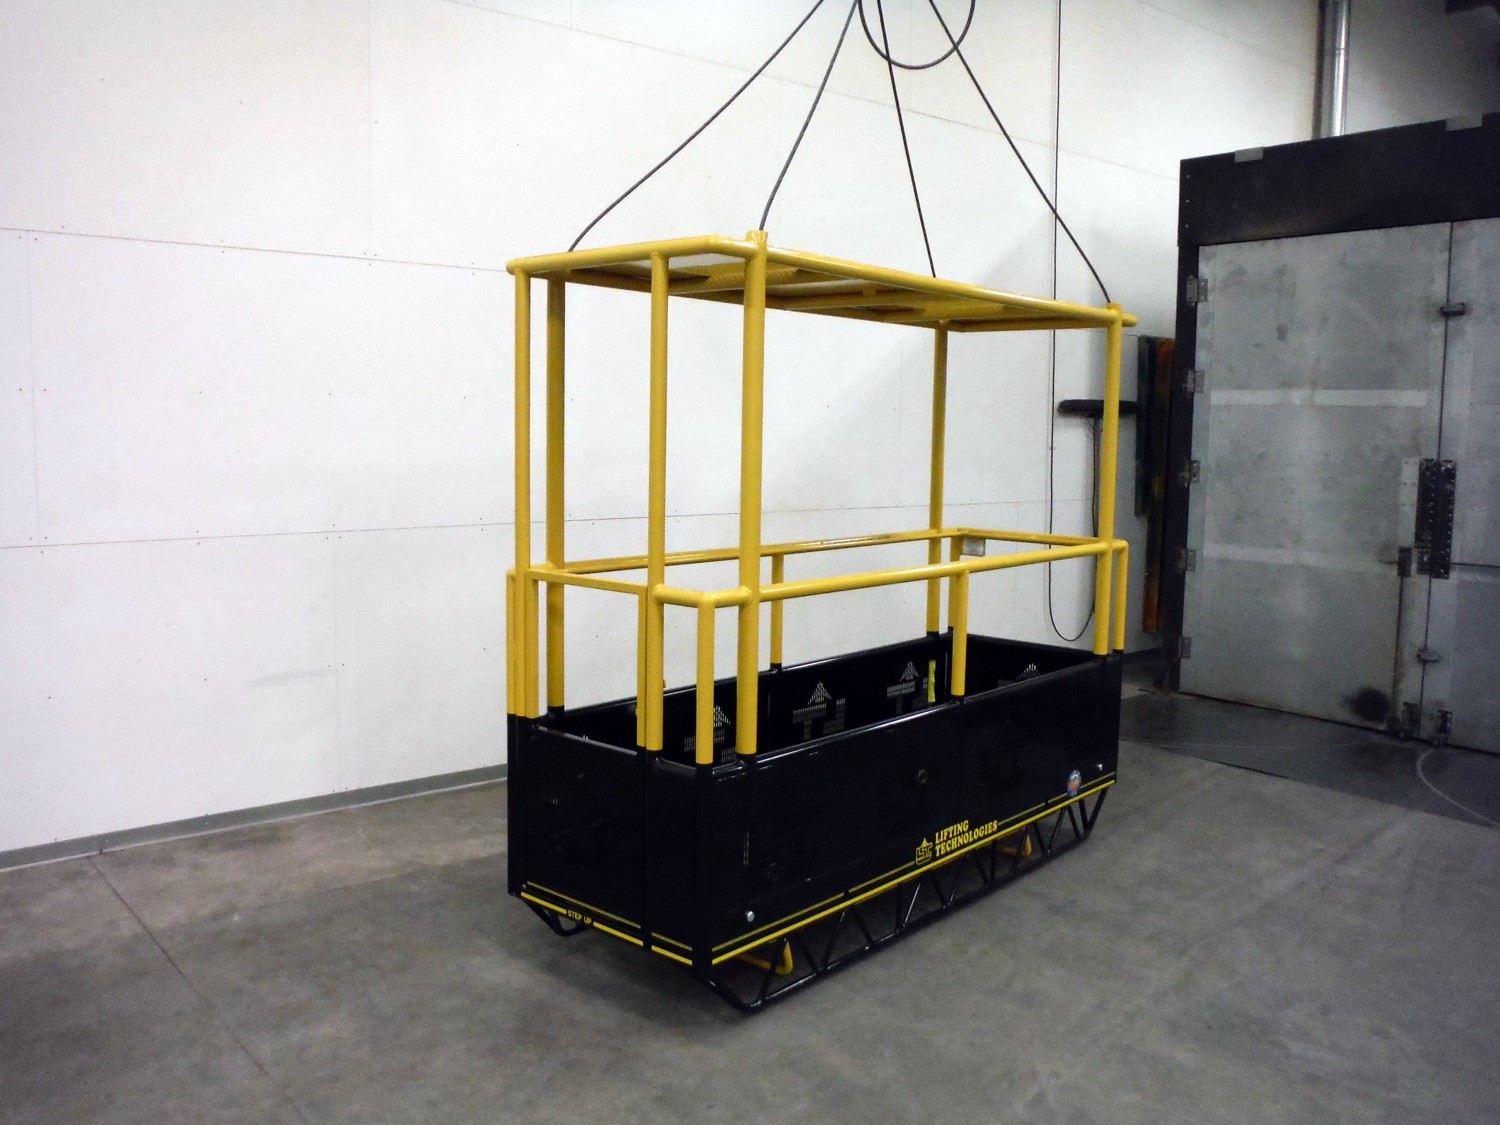 Premier Crane Man Basket Lifting Technologies